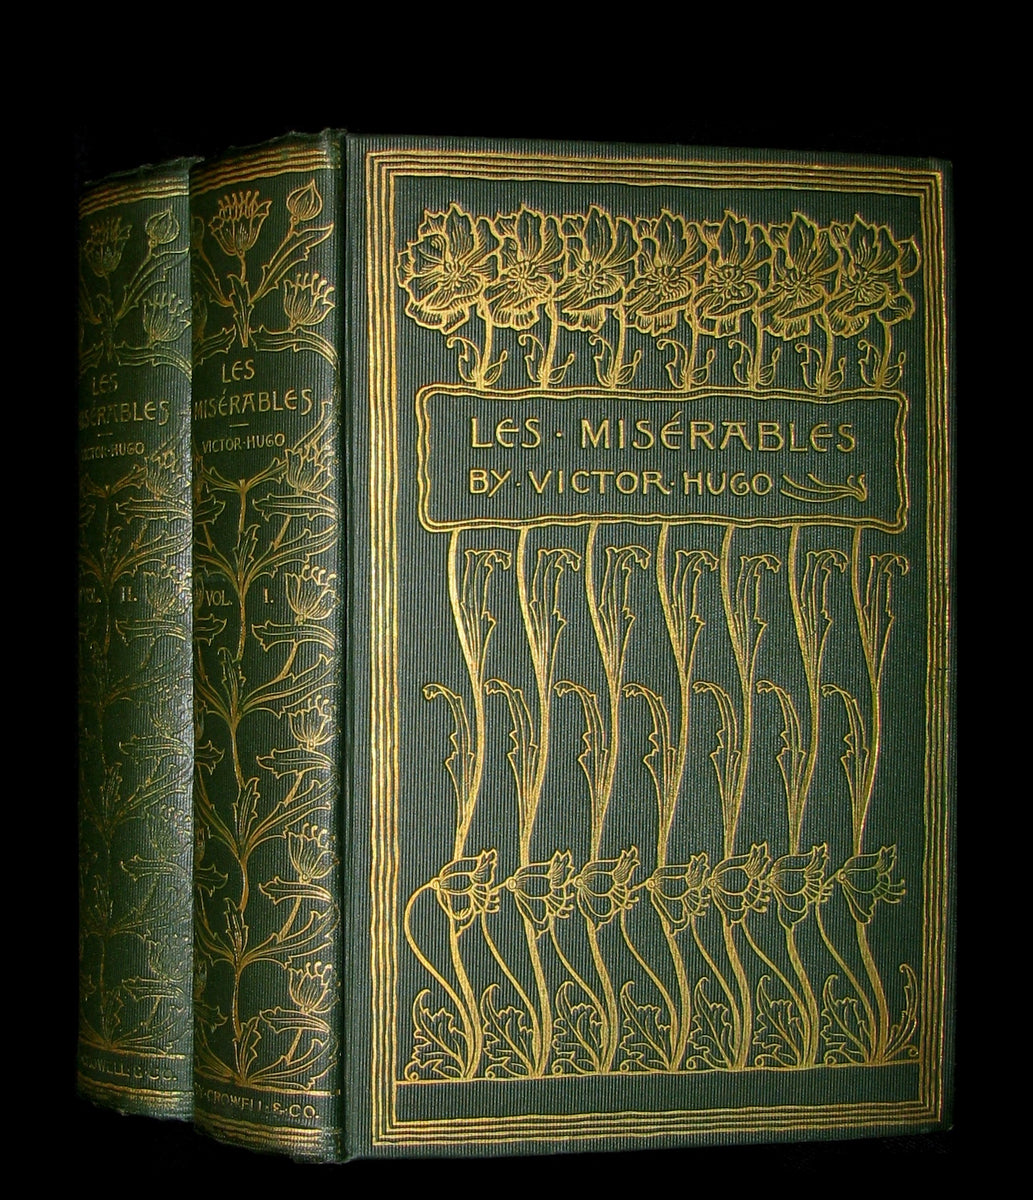 1887 Rare Victorian Book set - LES MISERABLES by Victor Hugo. Illustra ...